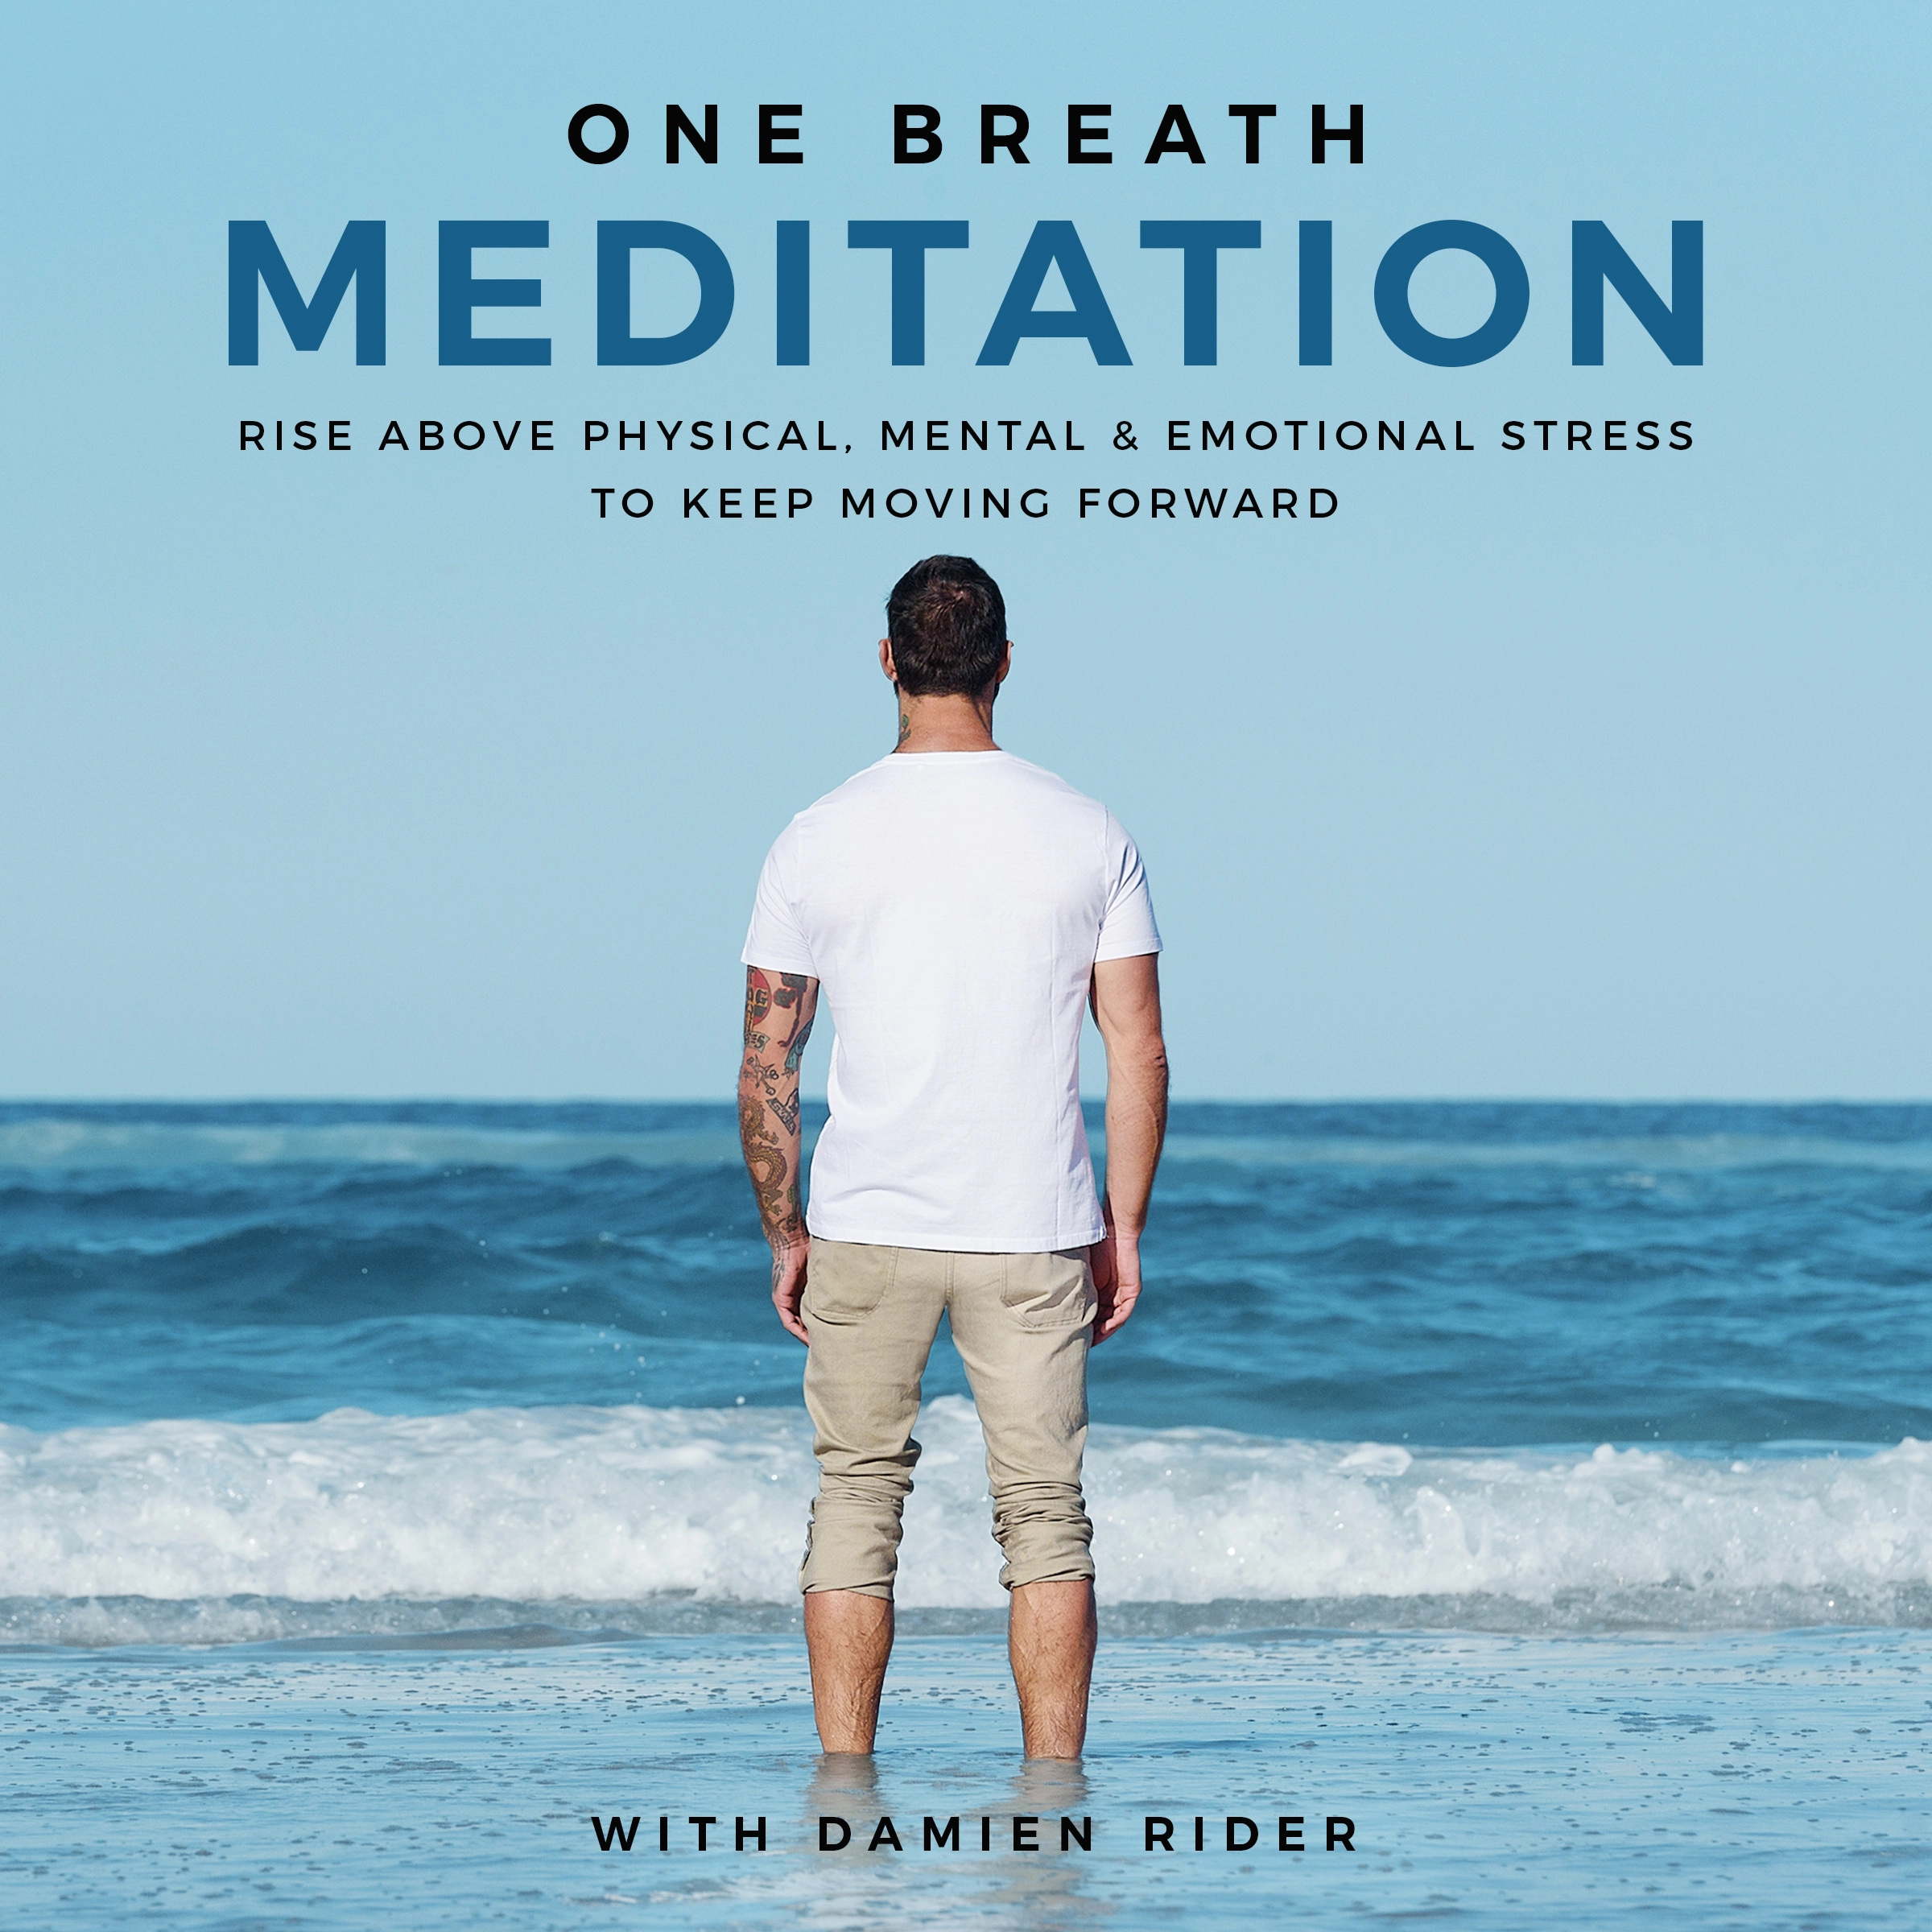 One Breath Meditation Audiobook by Damien Rider